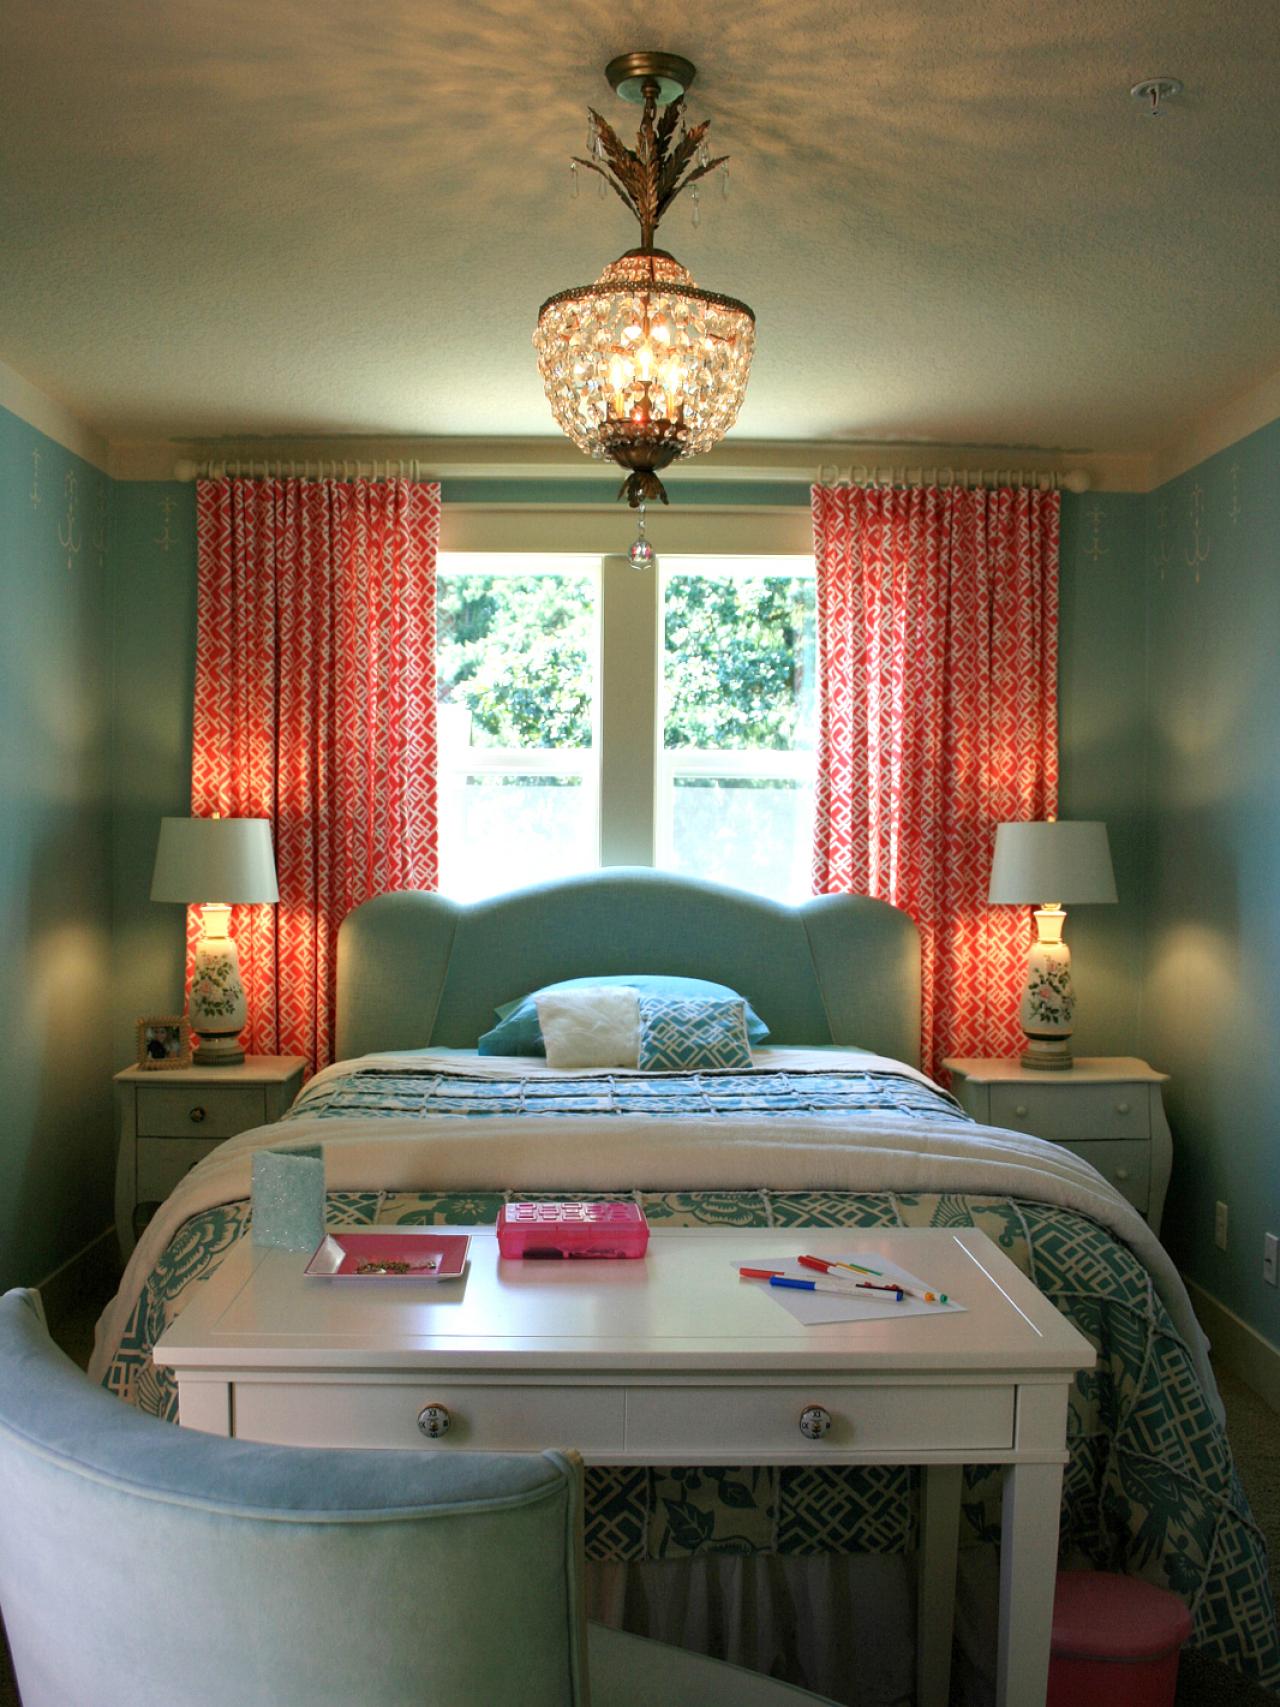 35 Gorgeous Girly Bedroom Design Ideas - Decoration Love